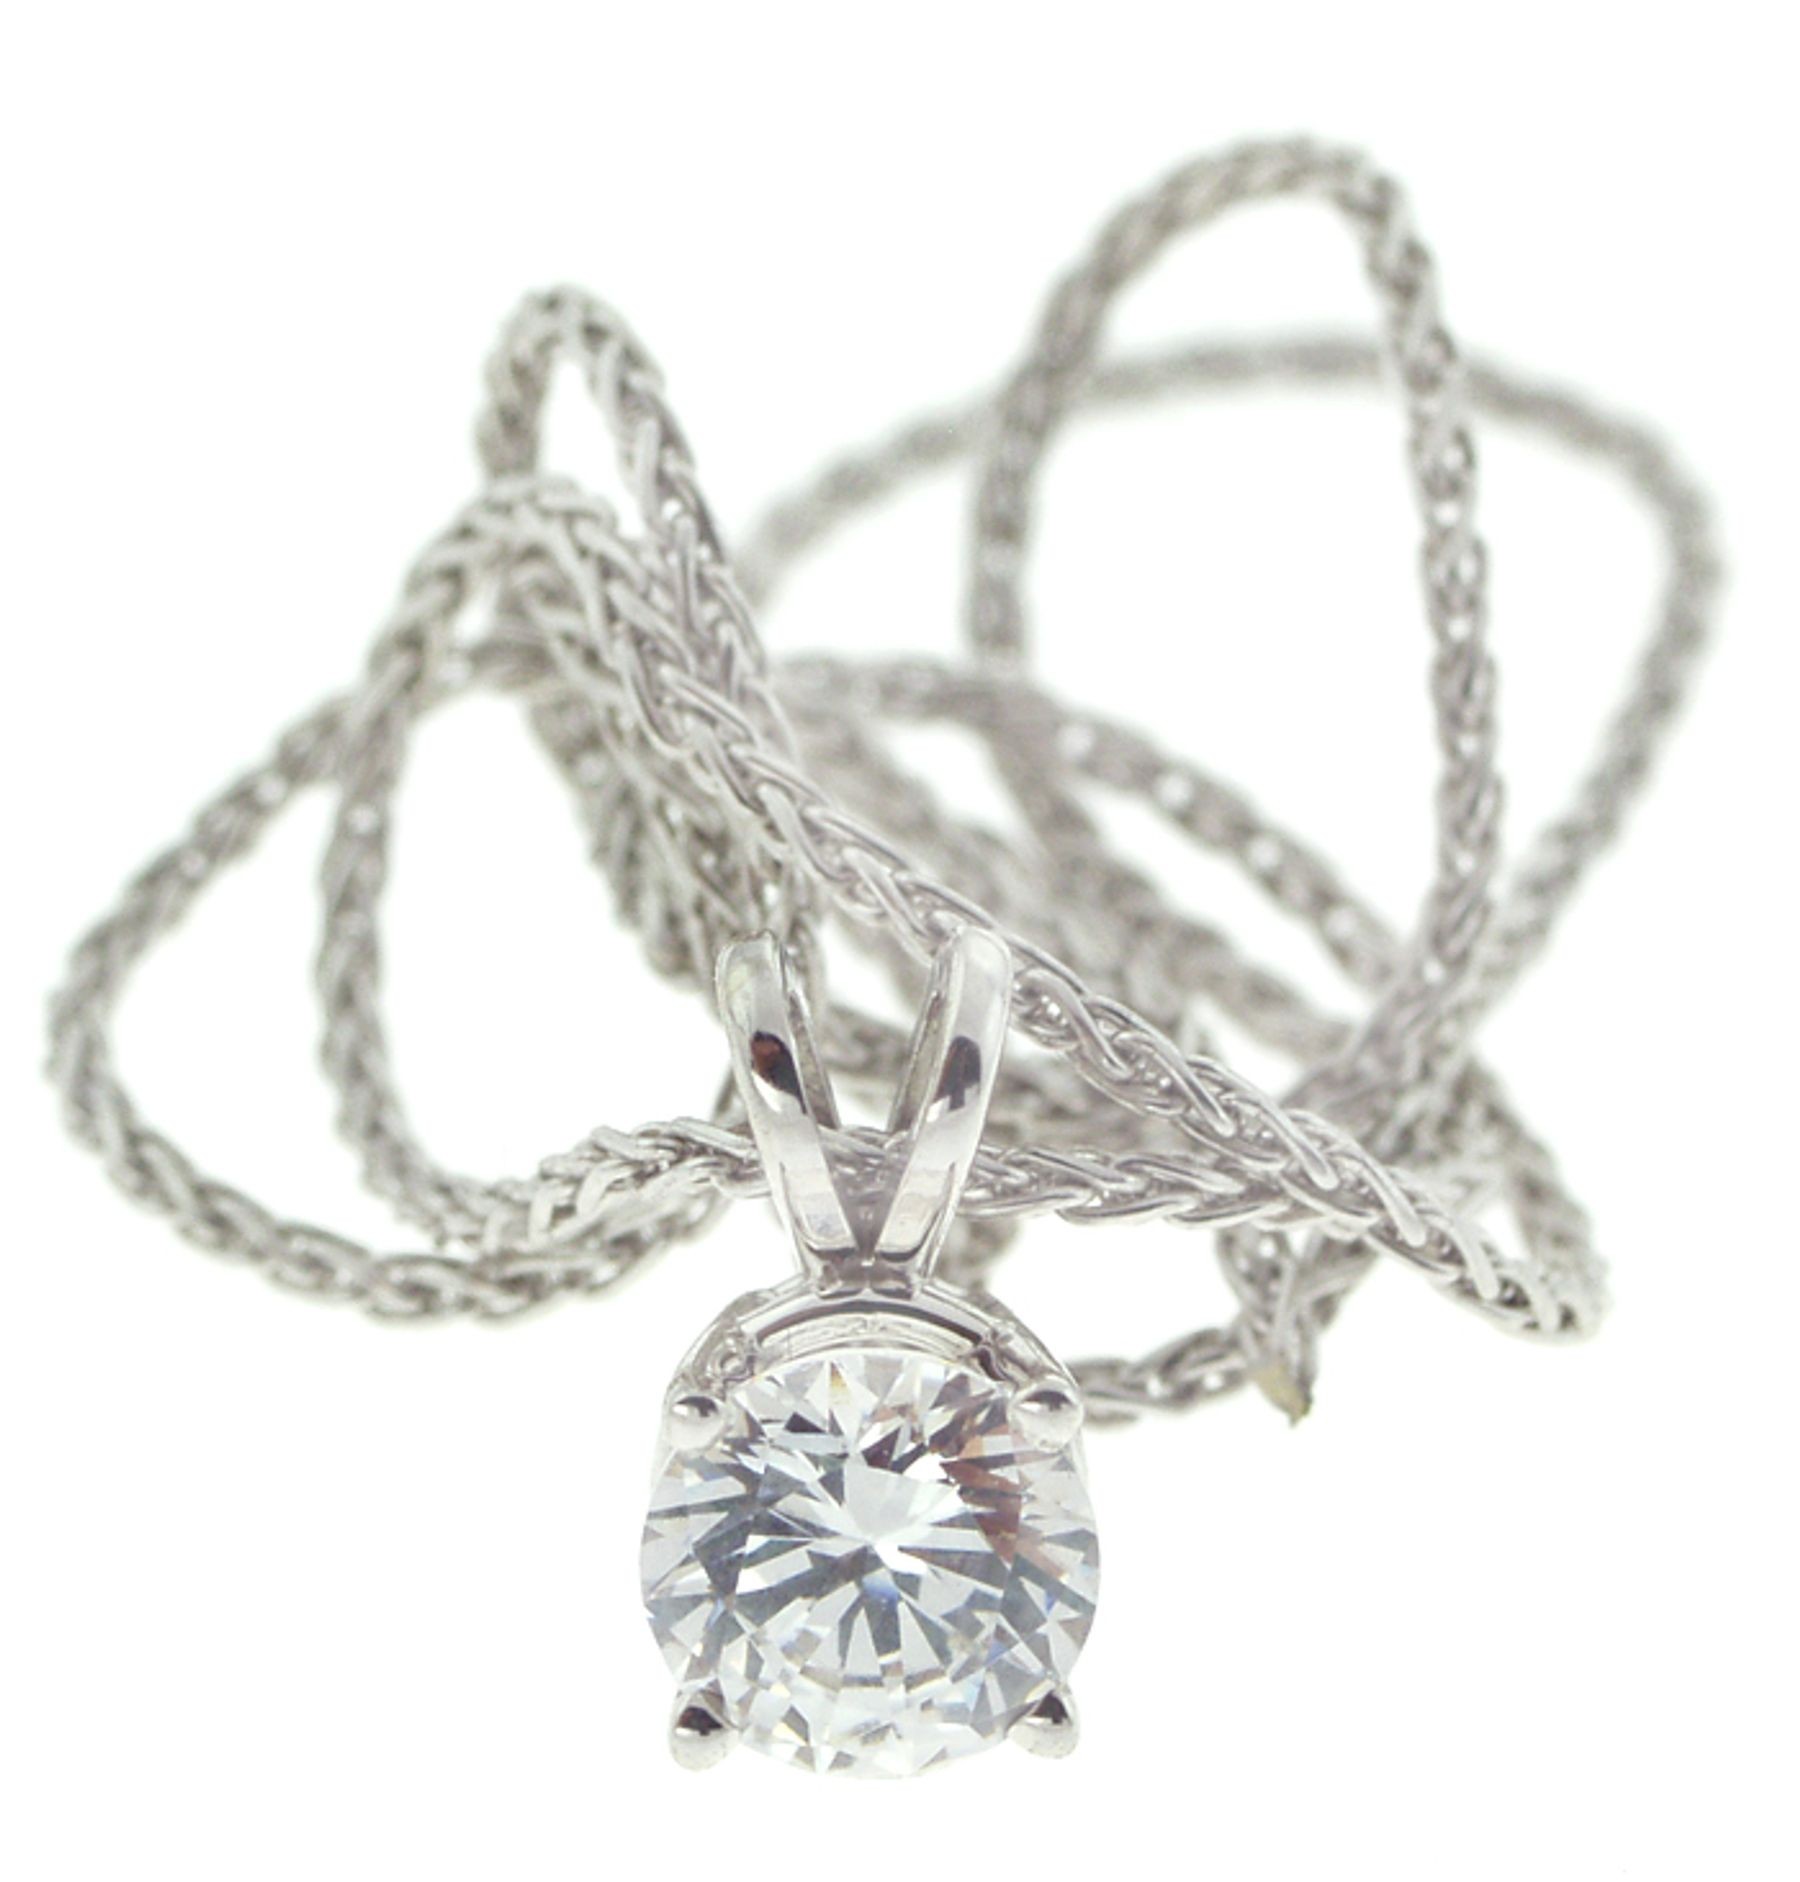 Platinum diamond pendant. Bezel set round diamond pendant with chain